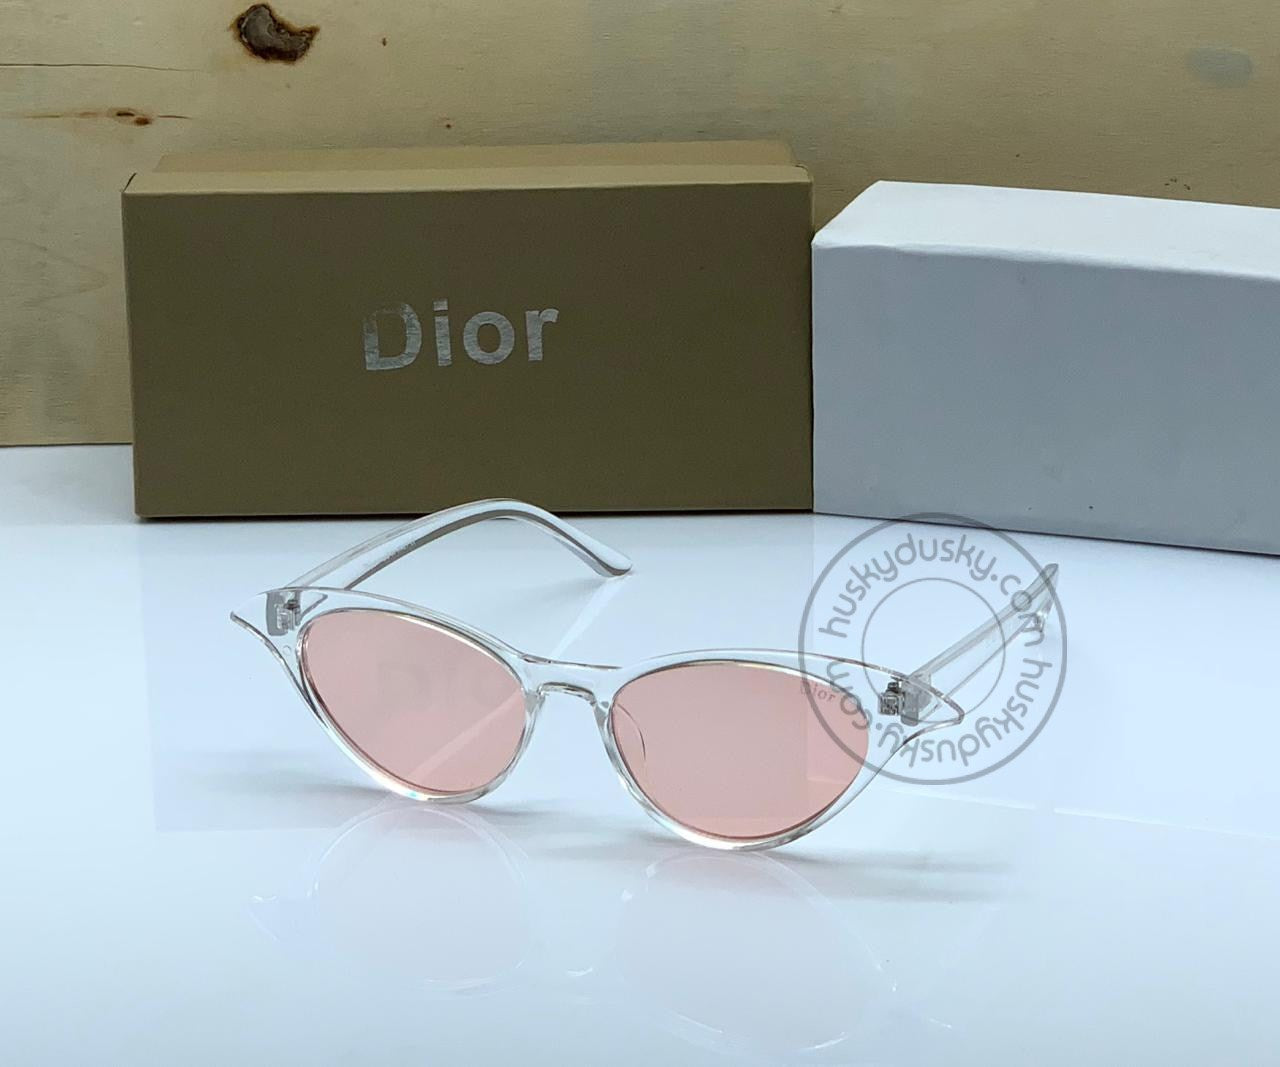 Dior Pink Glass Women's Sunglass for Woman or Girl DR-789 transparent Frame Gift Sunglass